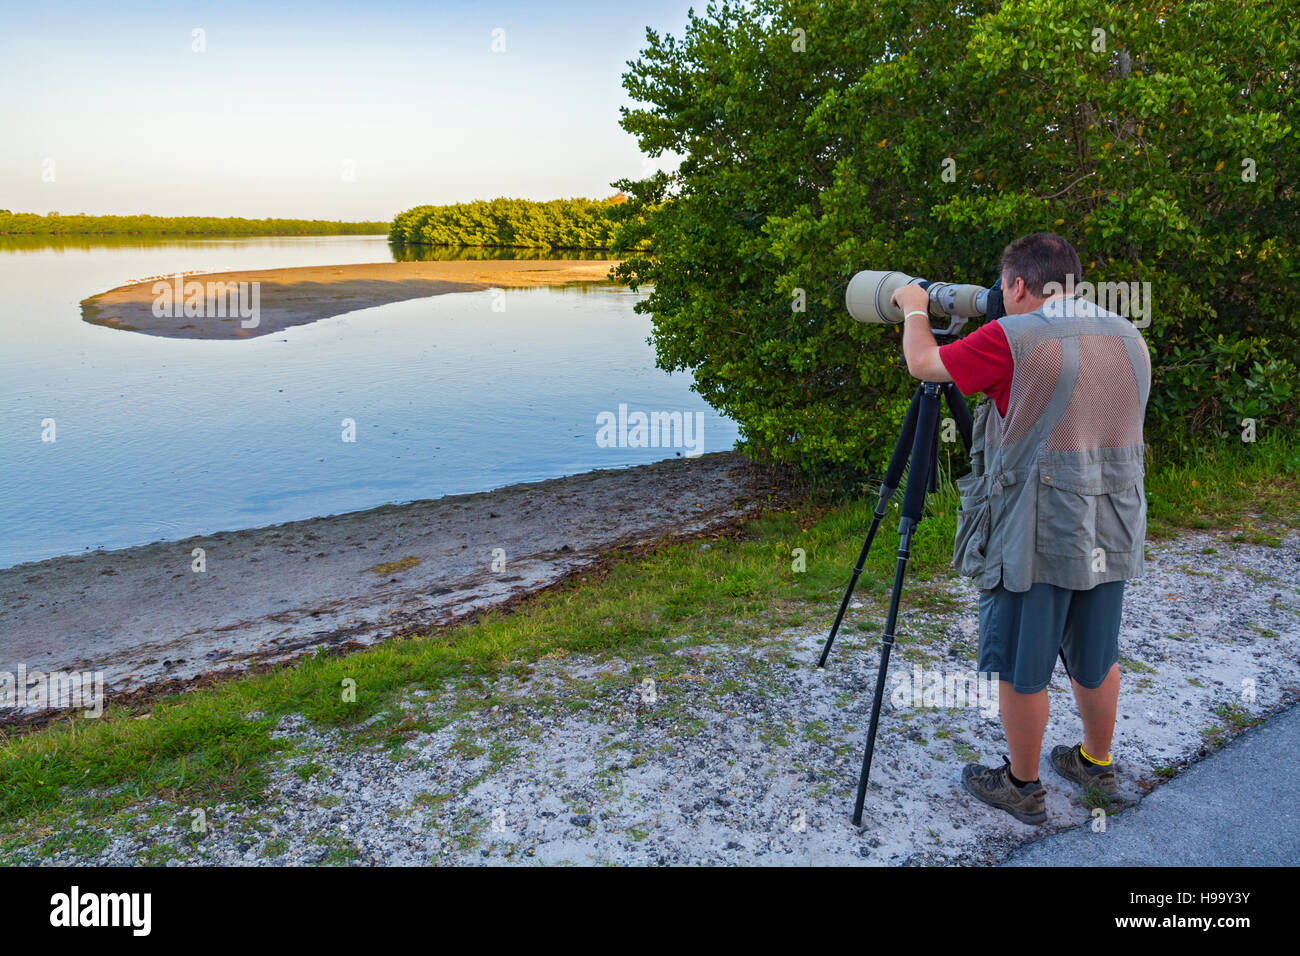 Florida, Sanibel Island, j.n. "Ding" Darling National Wildlife Refuge, Wildnis-Antrieb, Fotografen fotografieren Watvögel Stockfoto